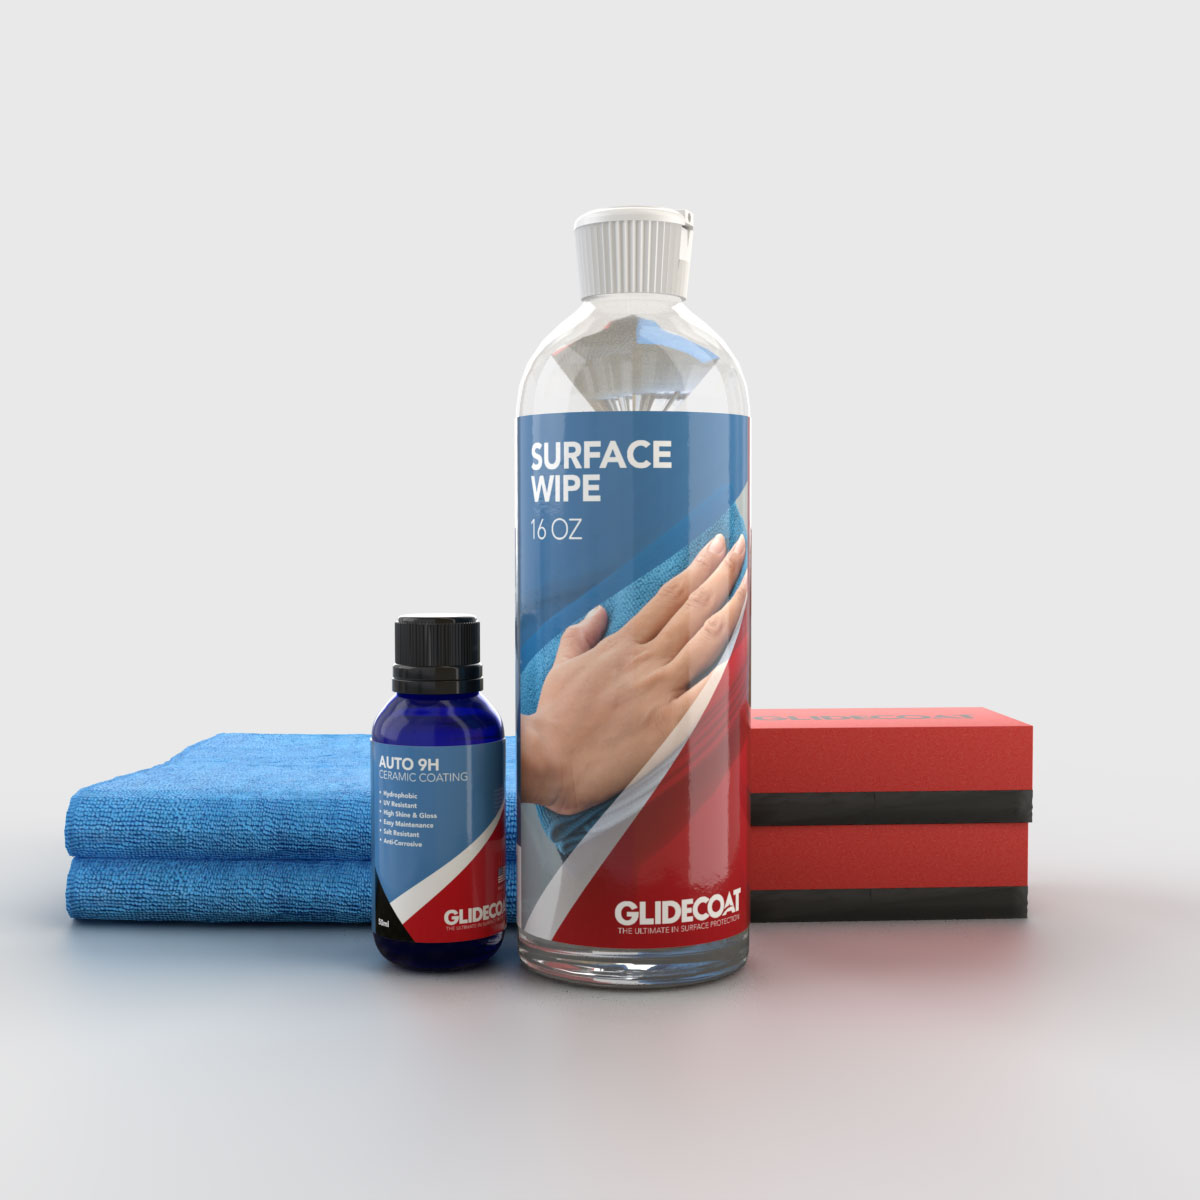 Car Ceramic Coating Kit Pro Scratch Resistant High Gloss Water Repellent  Set